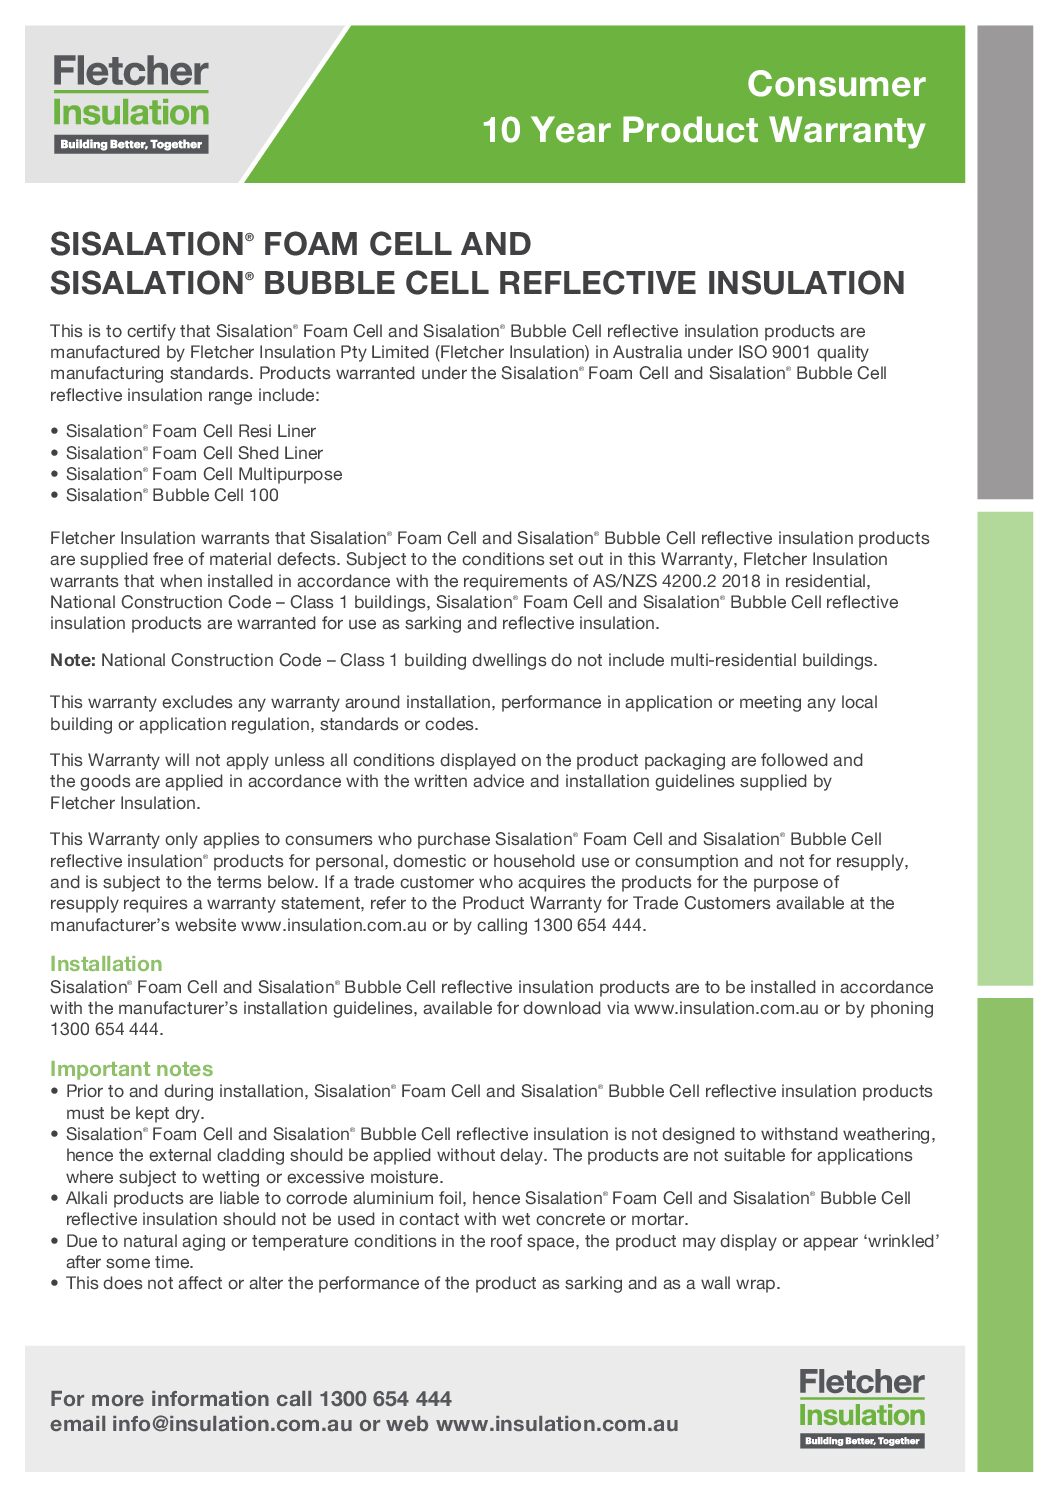 Sisalation® Foam Cell & Bubble Cell Consumer Warranty